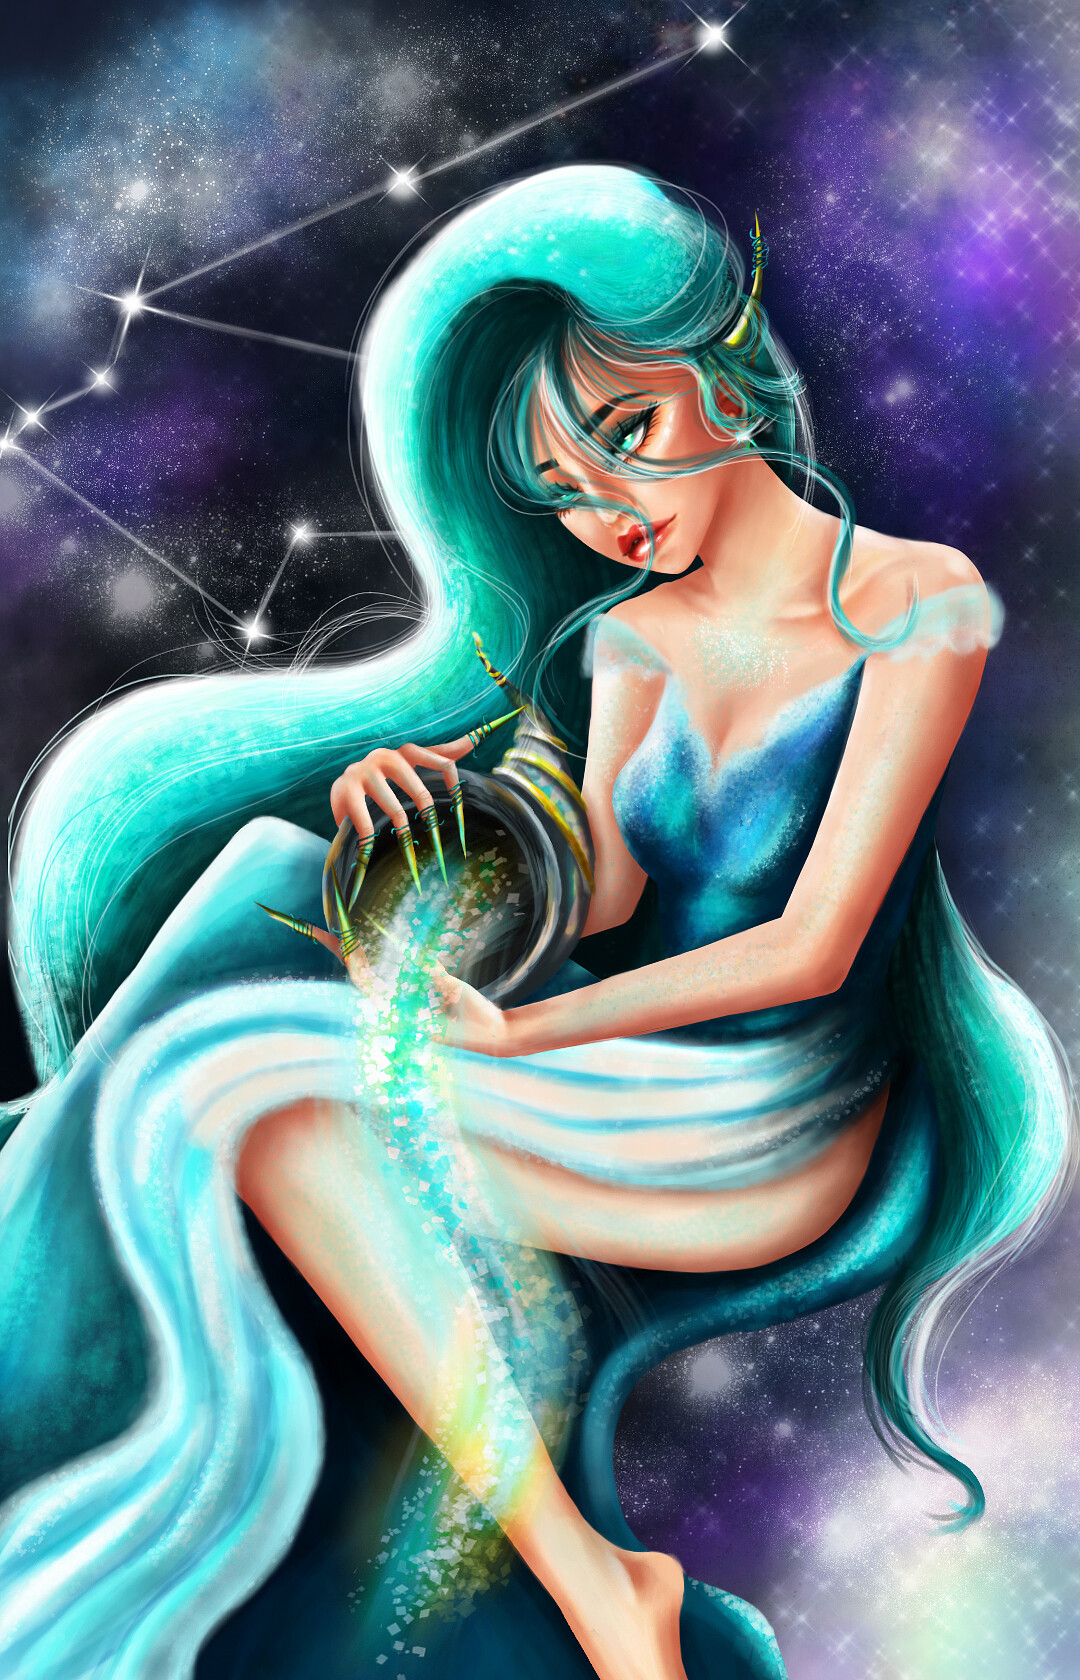 Wendy and Aquarius | Daily Anime Art